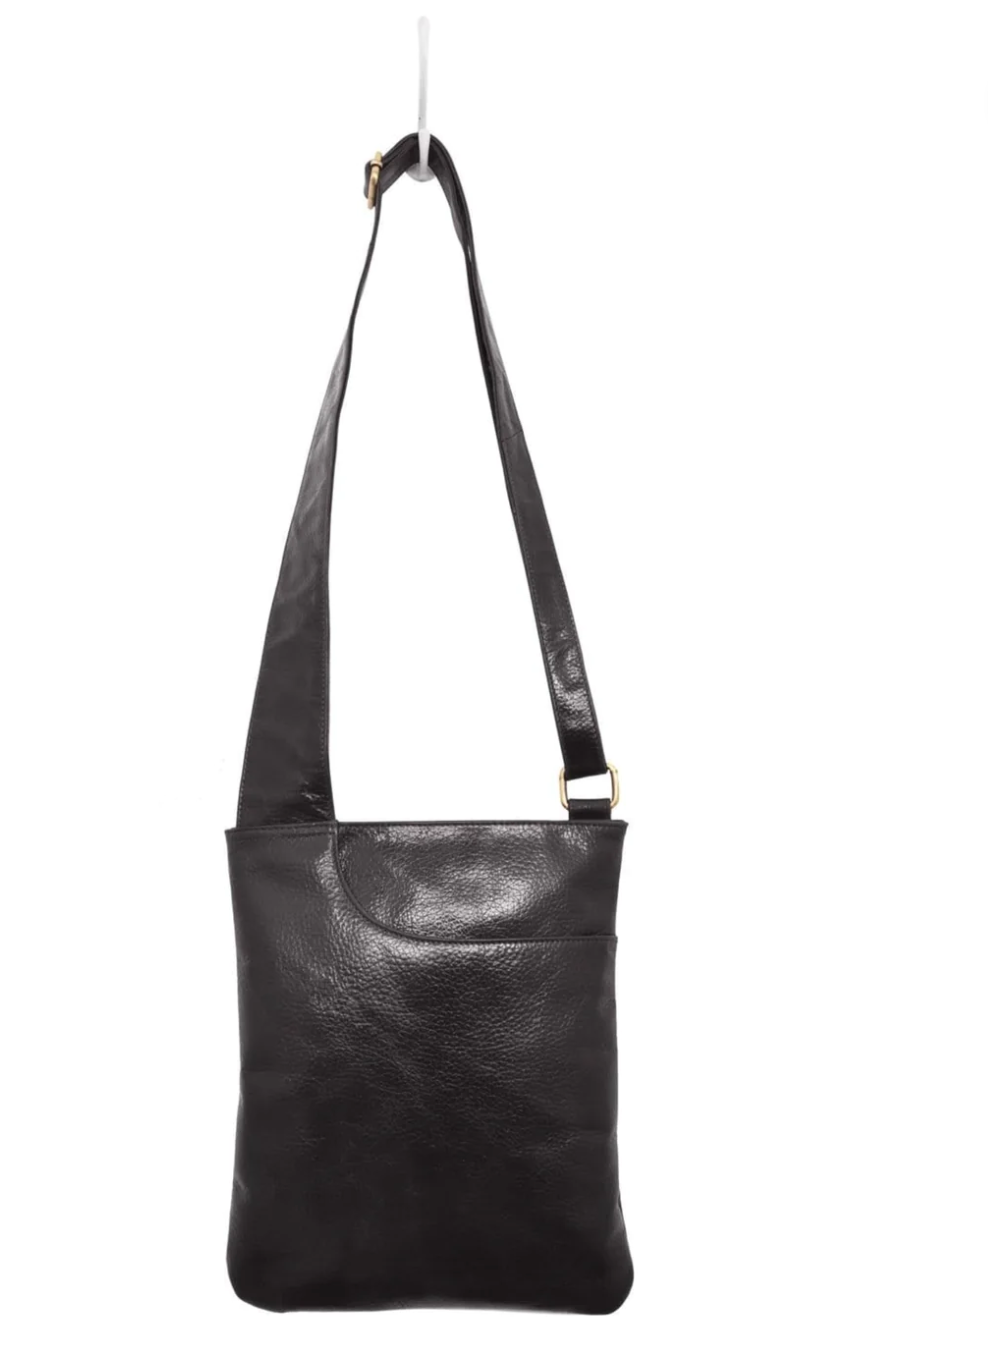 Latico leather purse, Athena crossbody (5 colors)